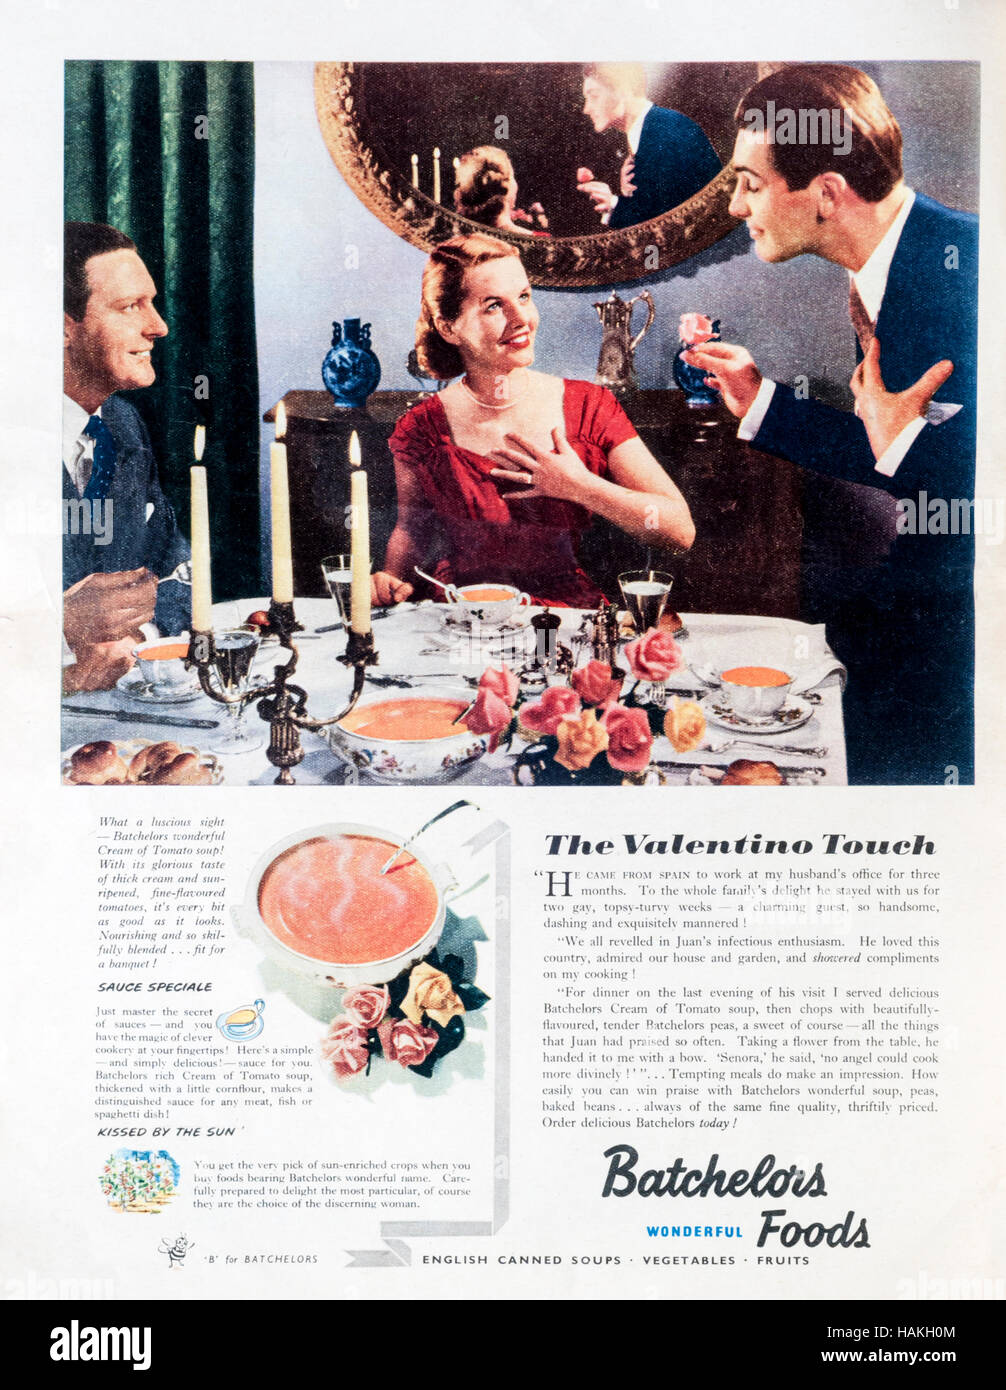 A 1950s magazine advertisement advertising Batchelors Foods. Stock Photo